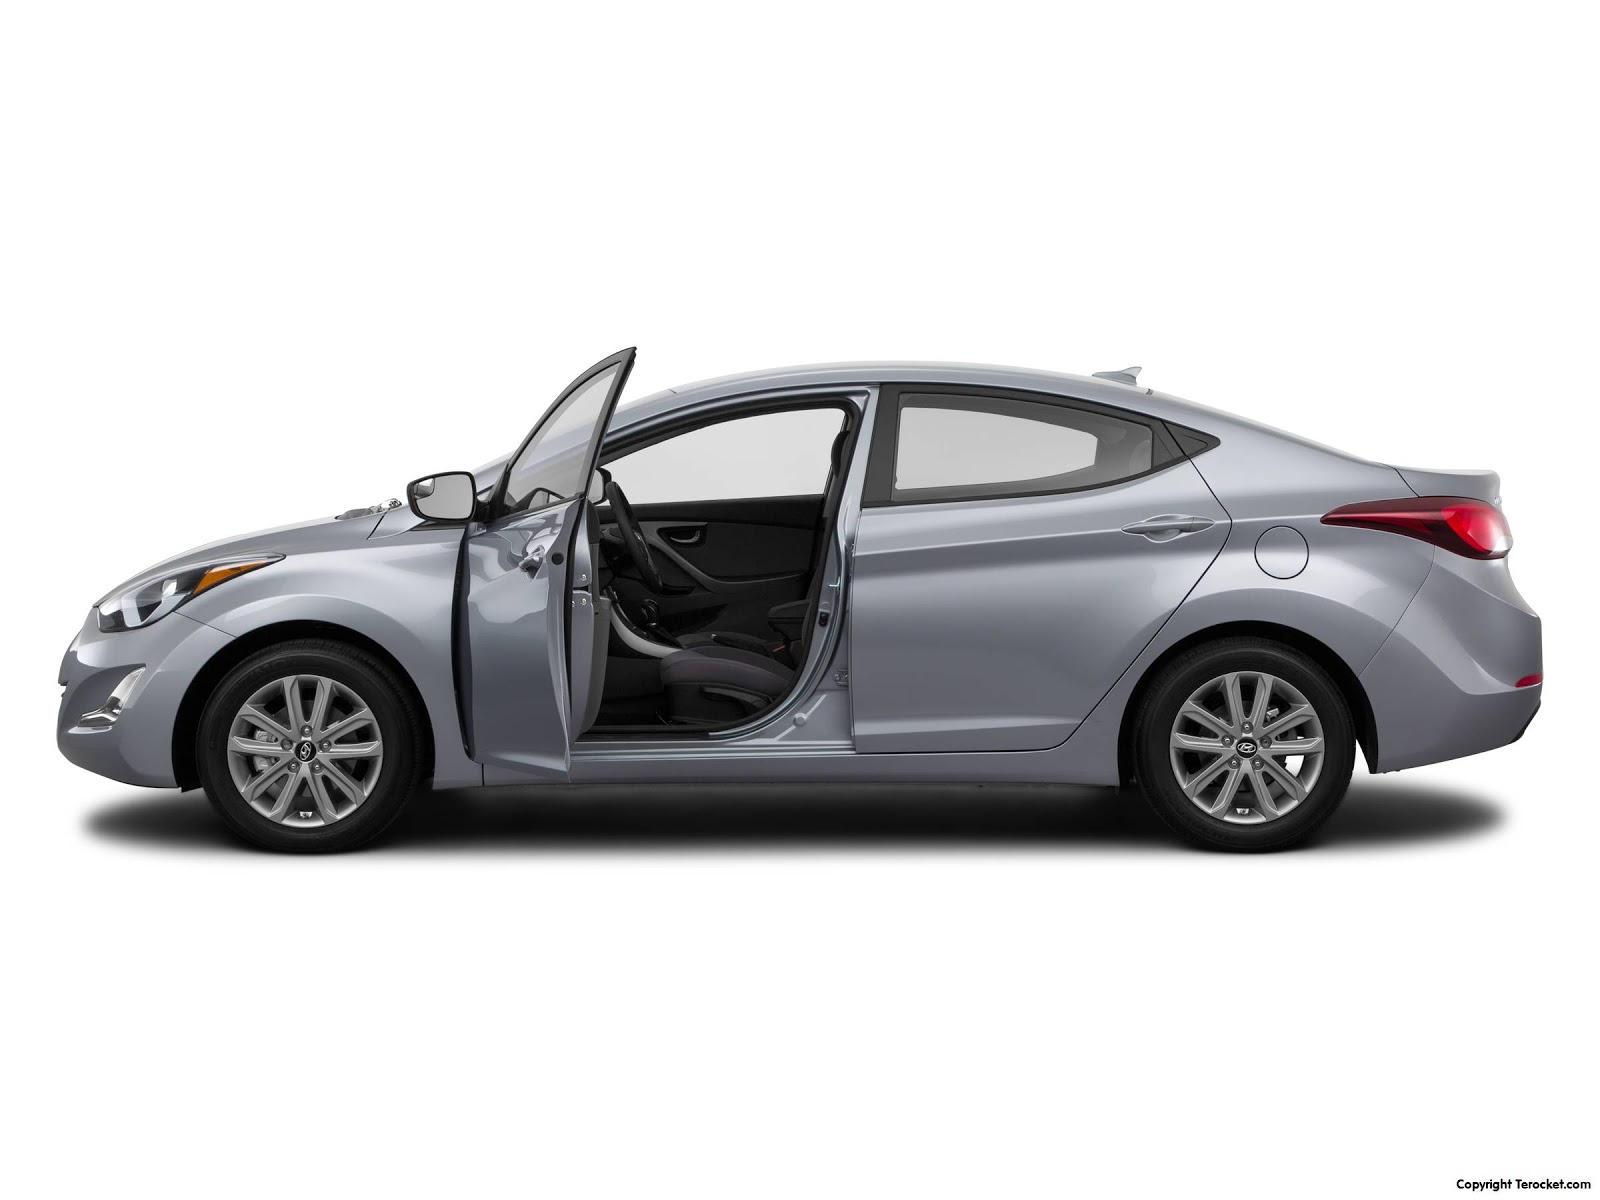 Đánh giá xe Hyundai Elantra 2016